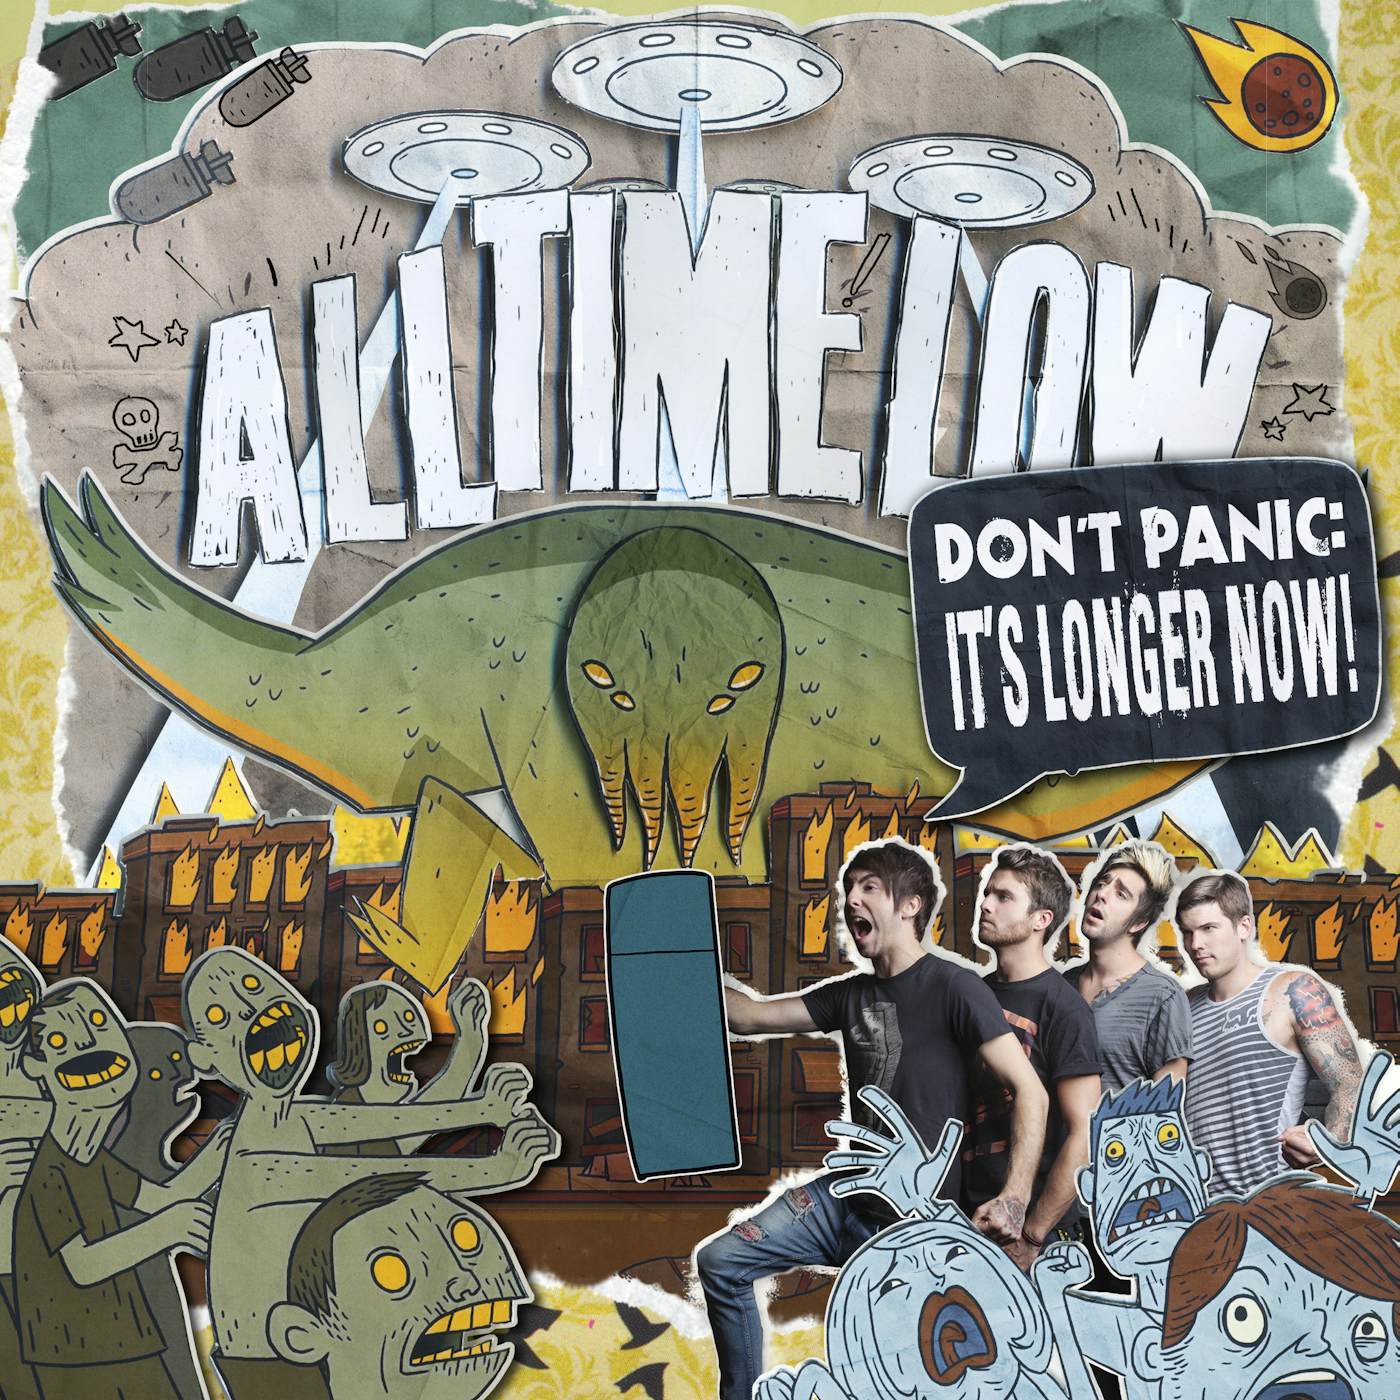 All Time Low DON'T PANIC: IT'S LONGER NOW - ORANGE Vinyl Record